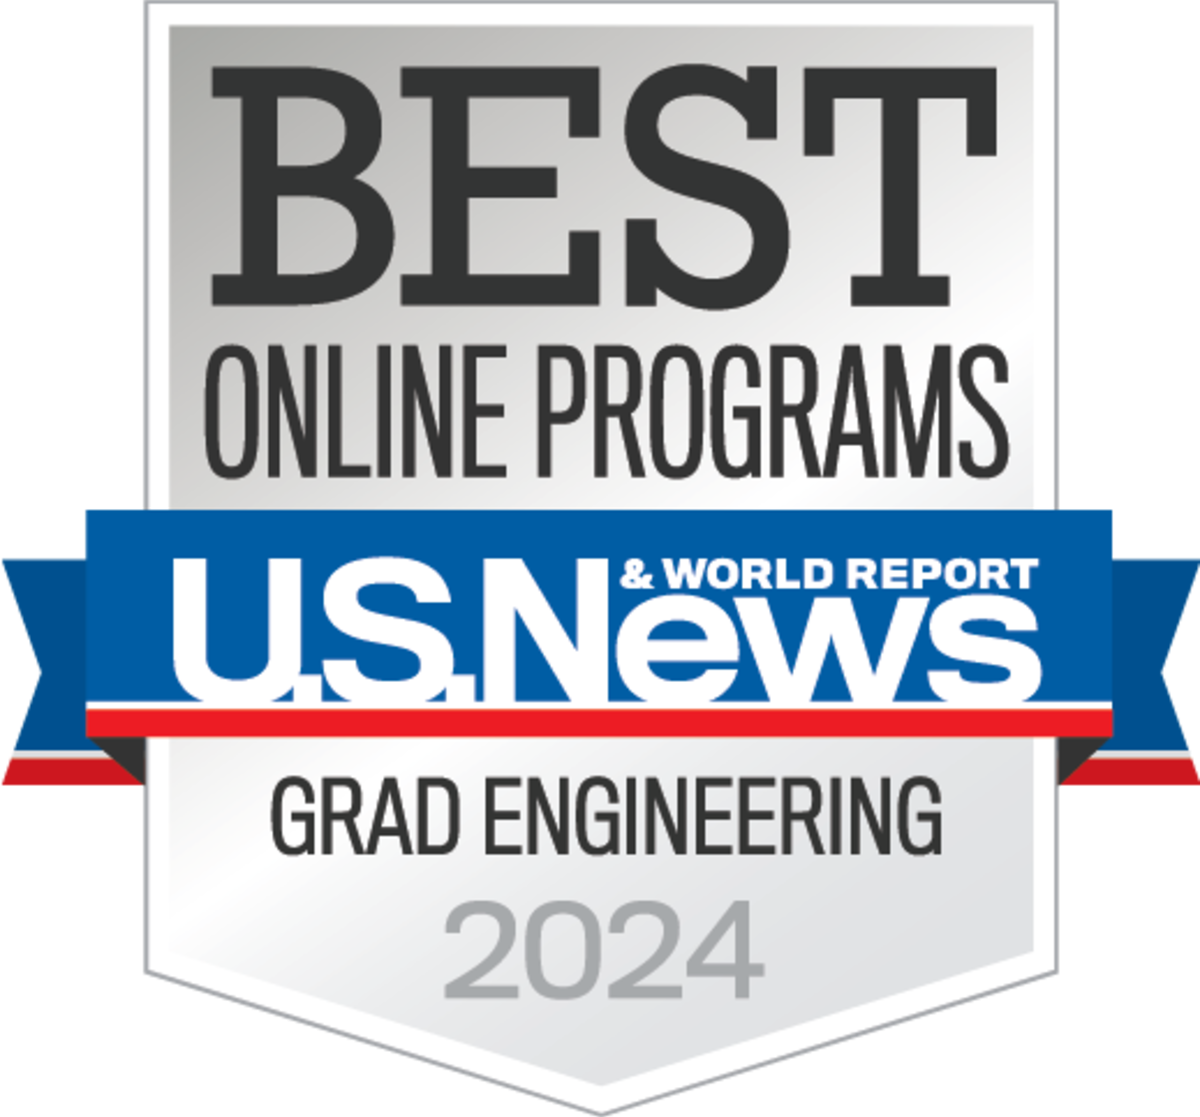 Best Online Programs U.News & World Report - Grad Engineering 2023